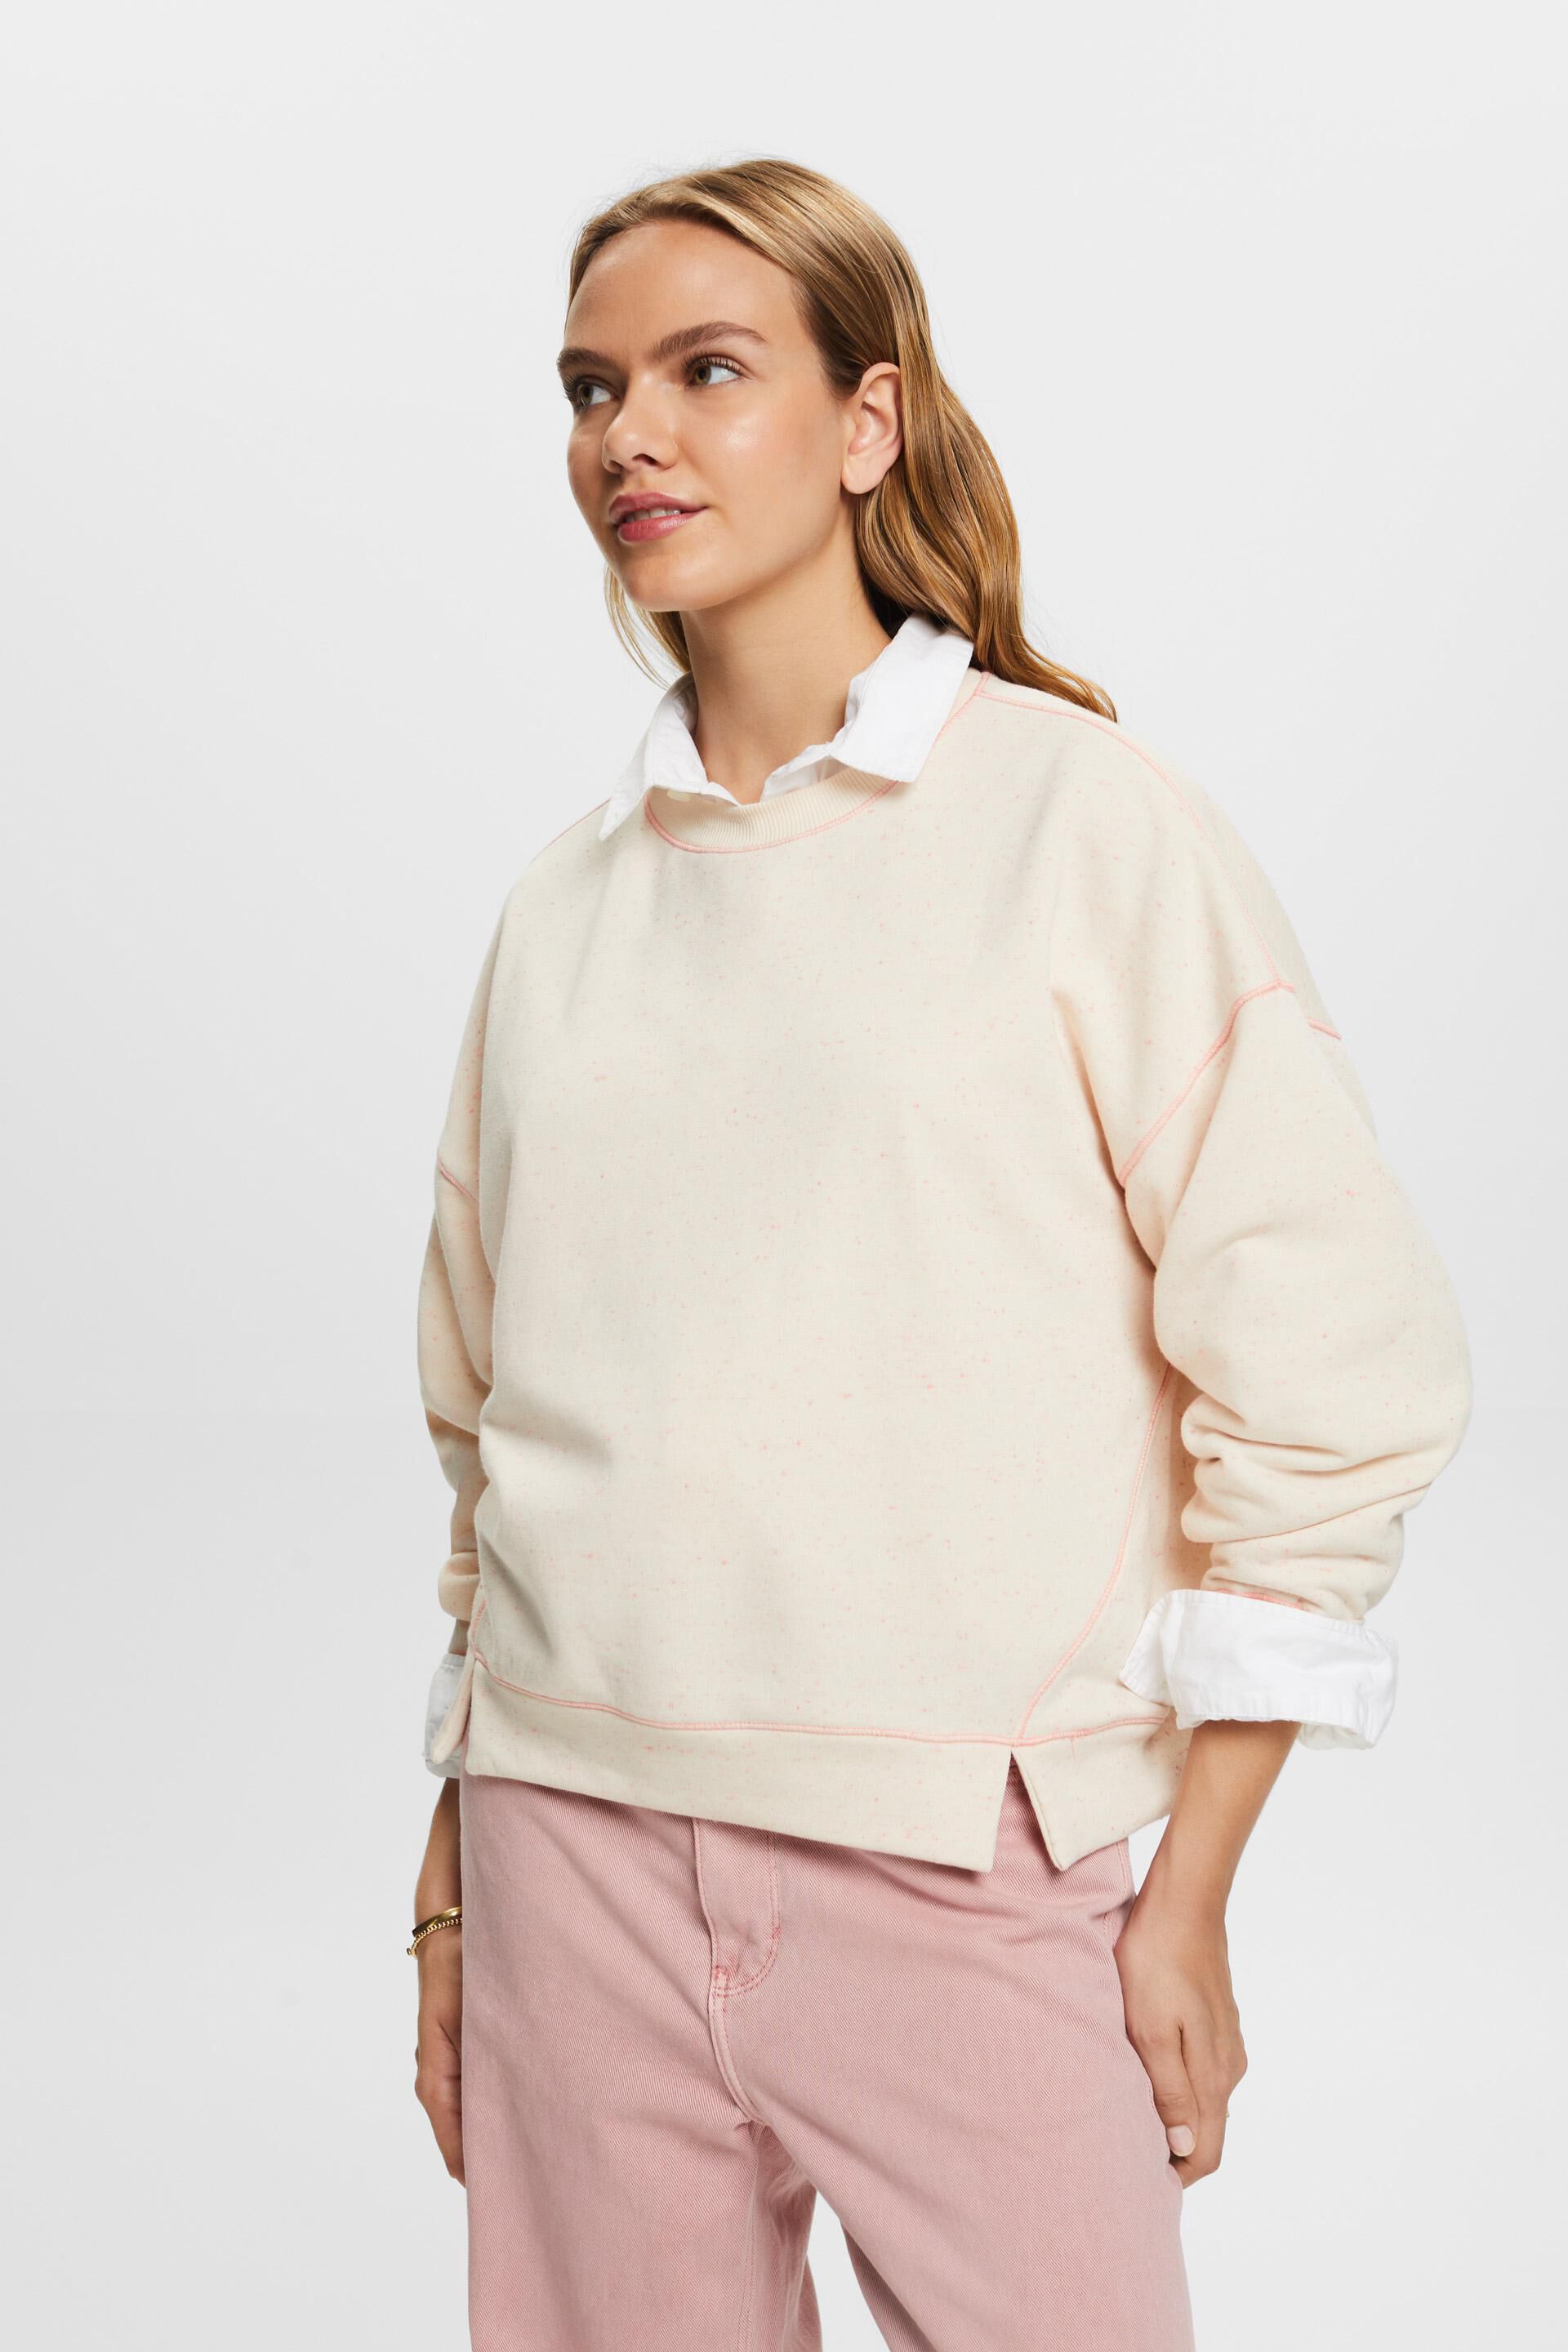 Sprinkled sweatshirt, cotton blend